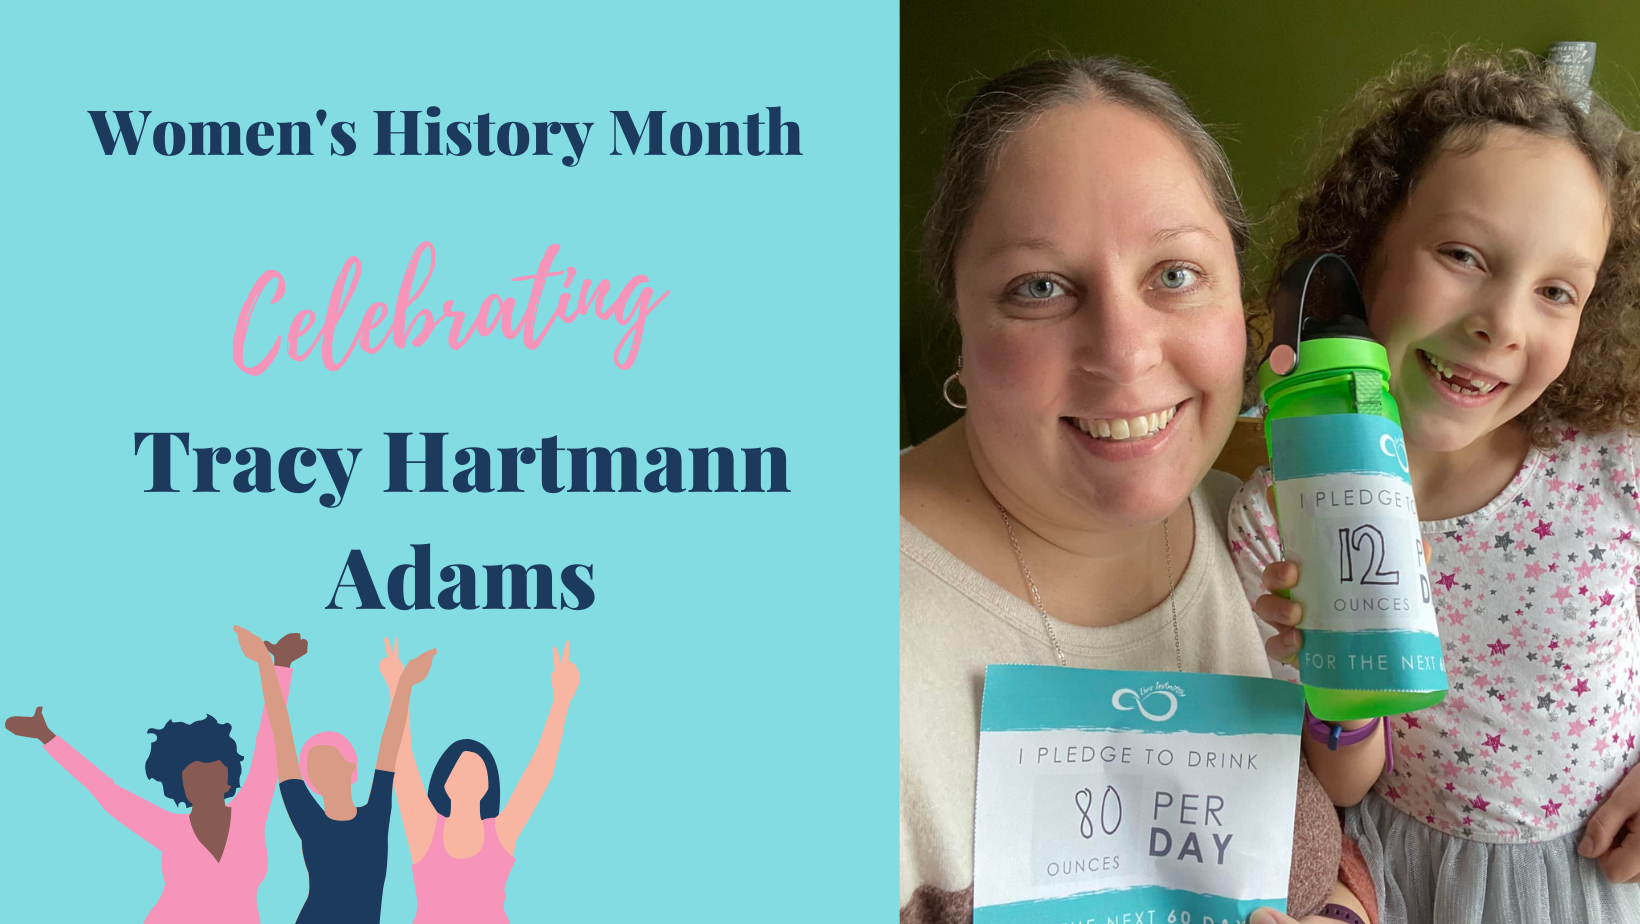 Women's History Month - Celebrating Tracy Hartmann Adams!